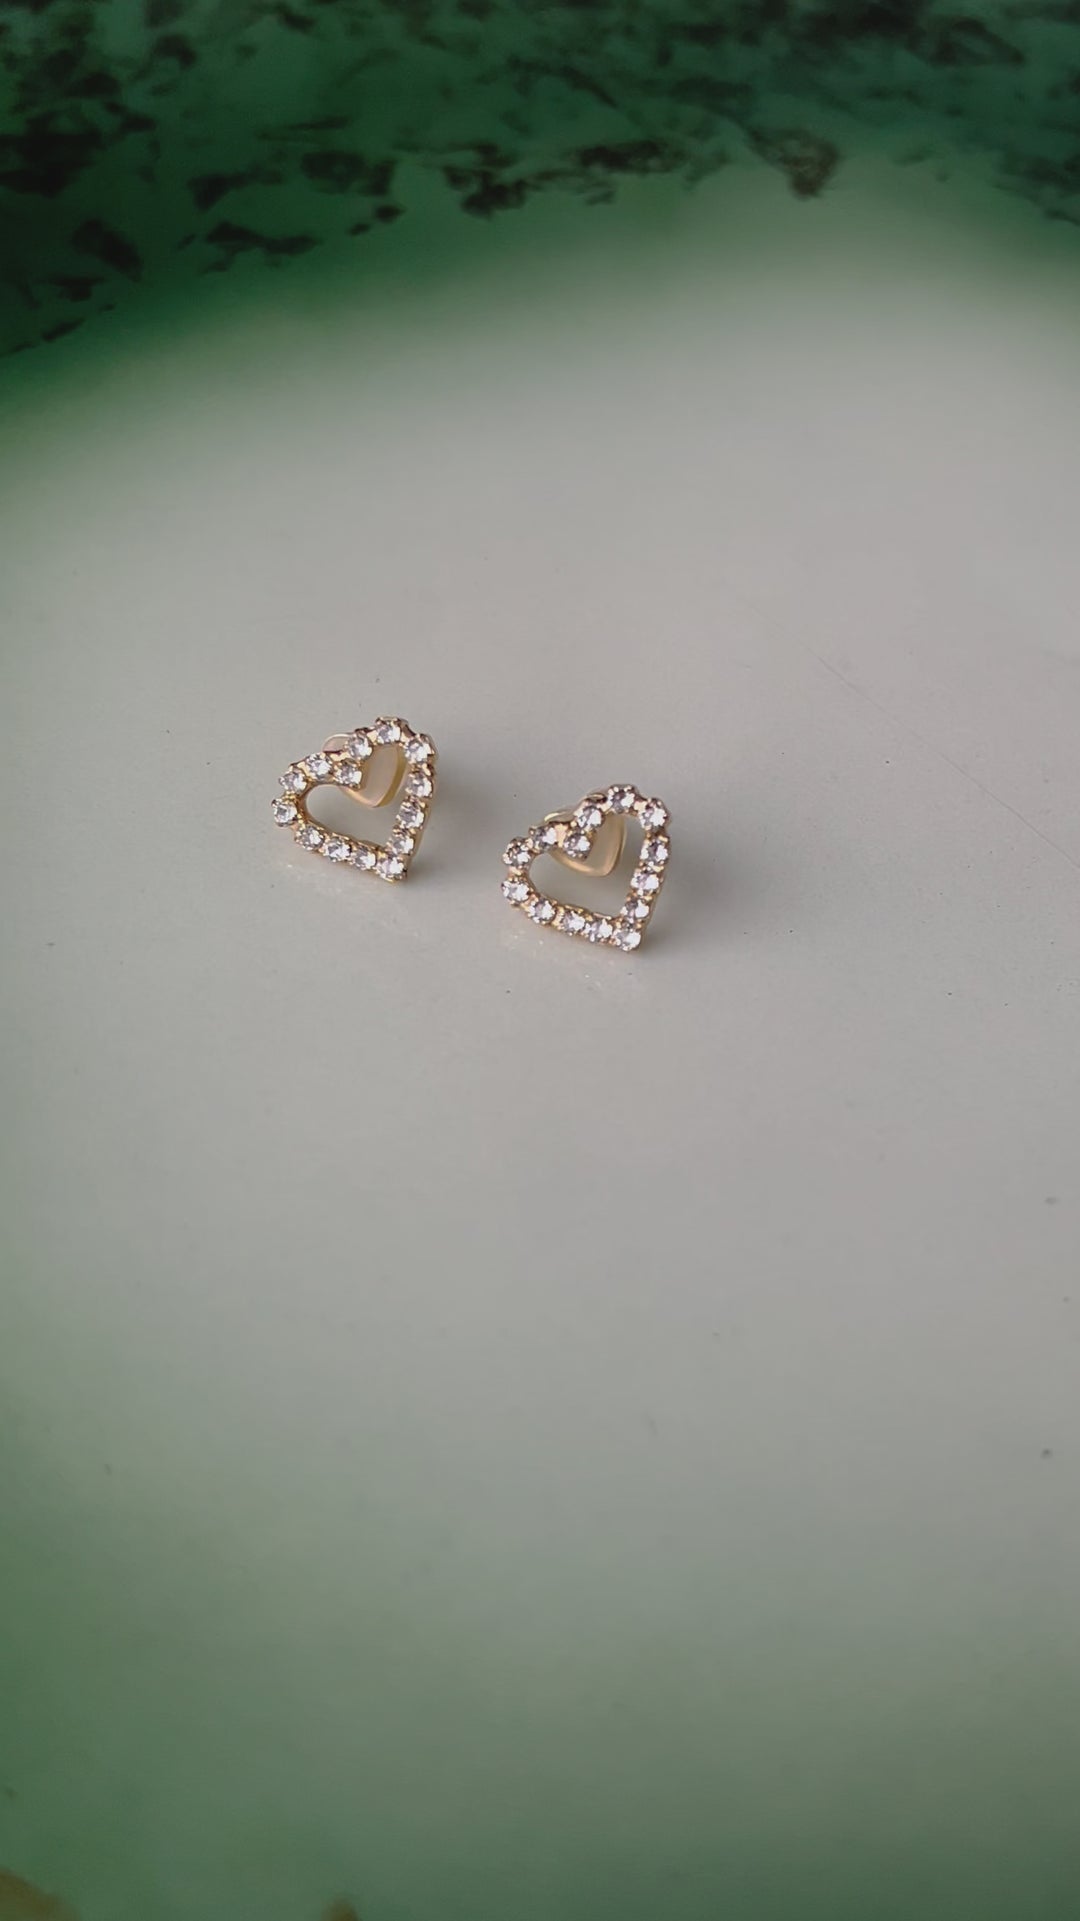 Sweetheart earrings - crystal